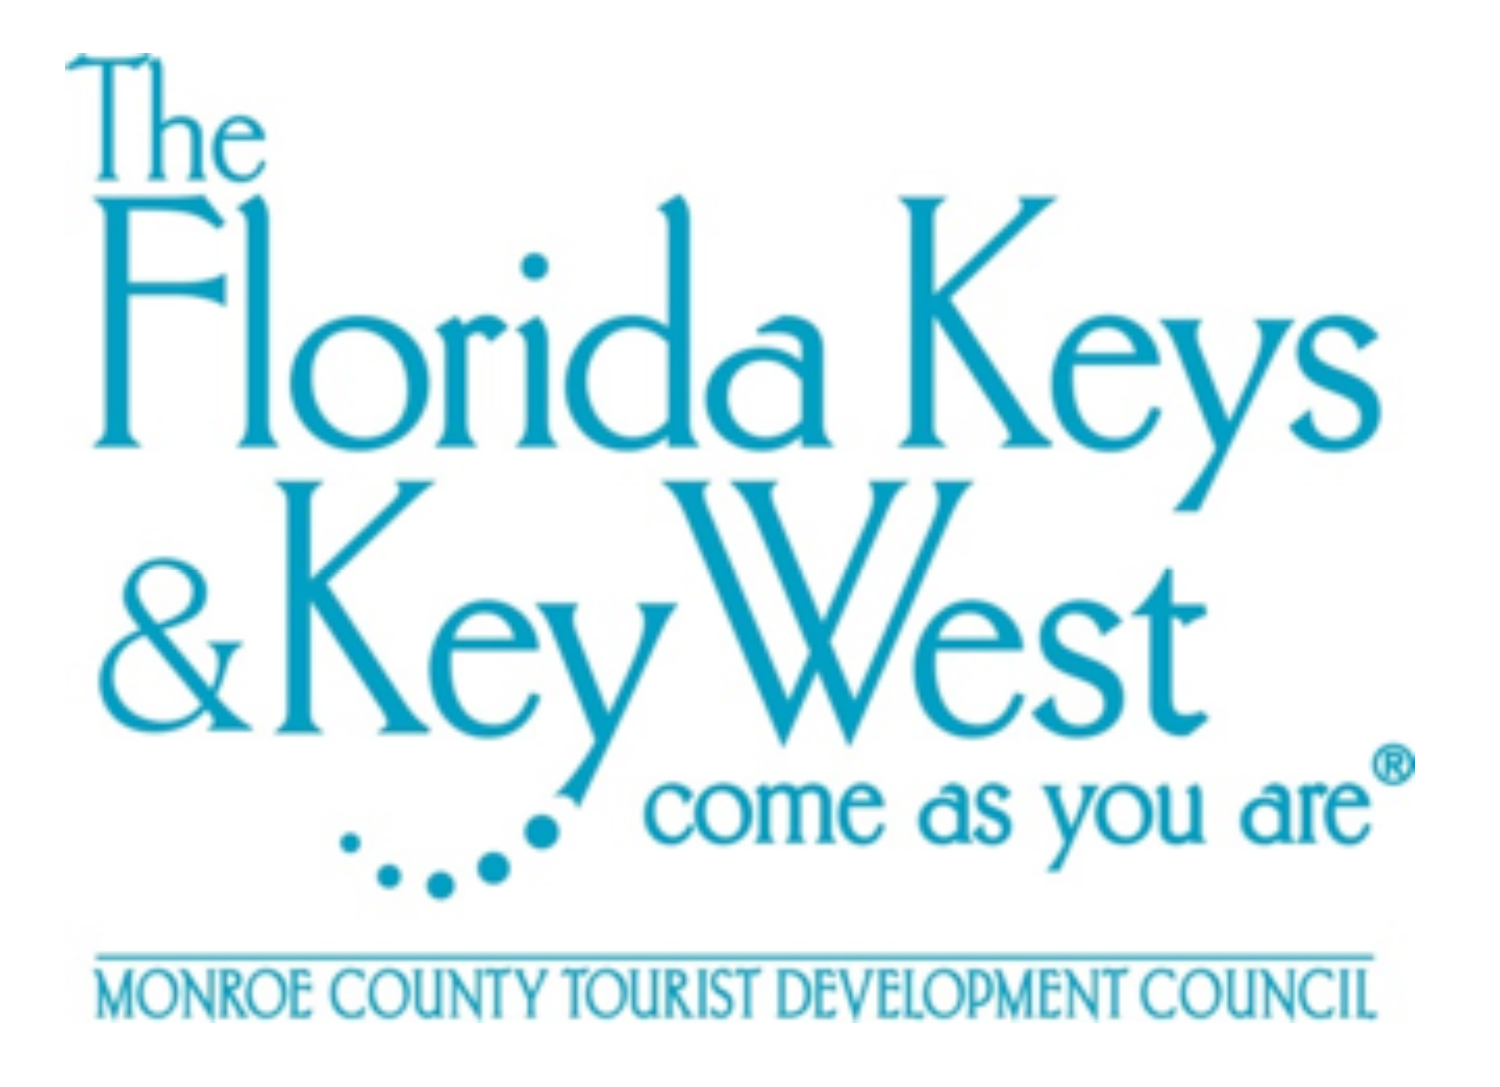 key west monro county tourist development council